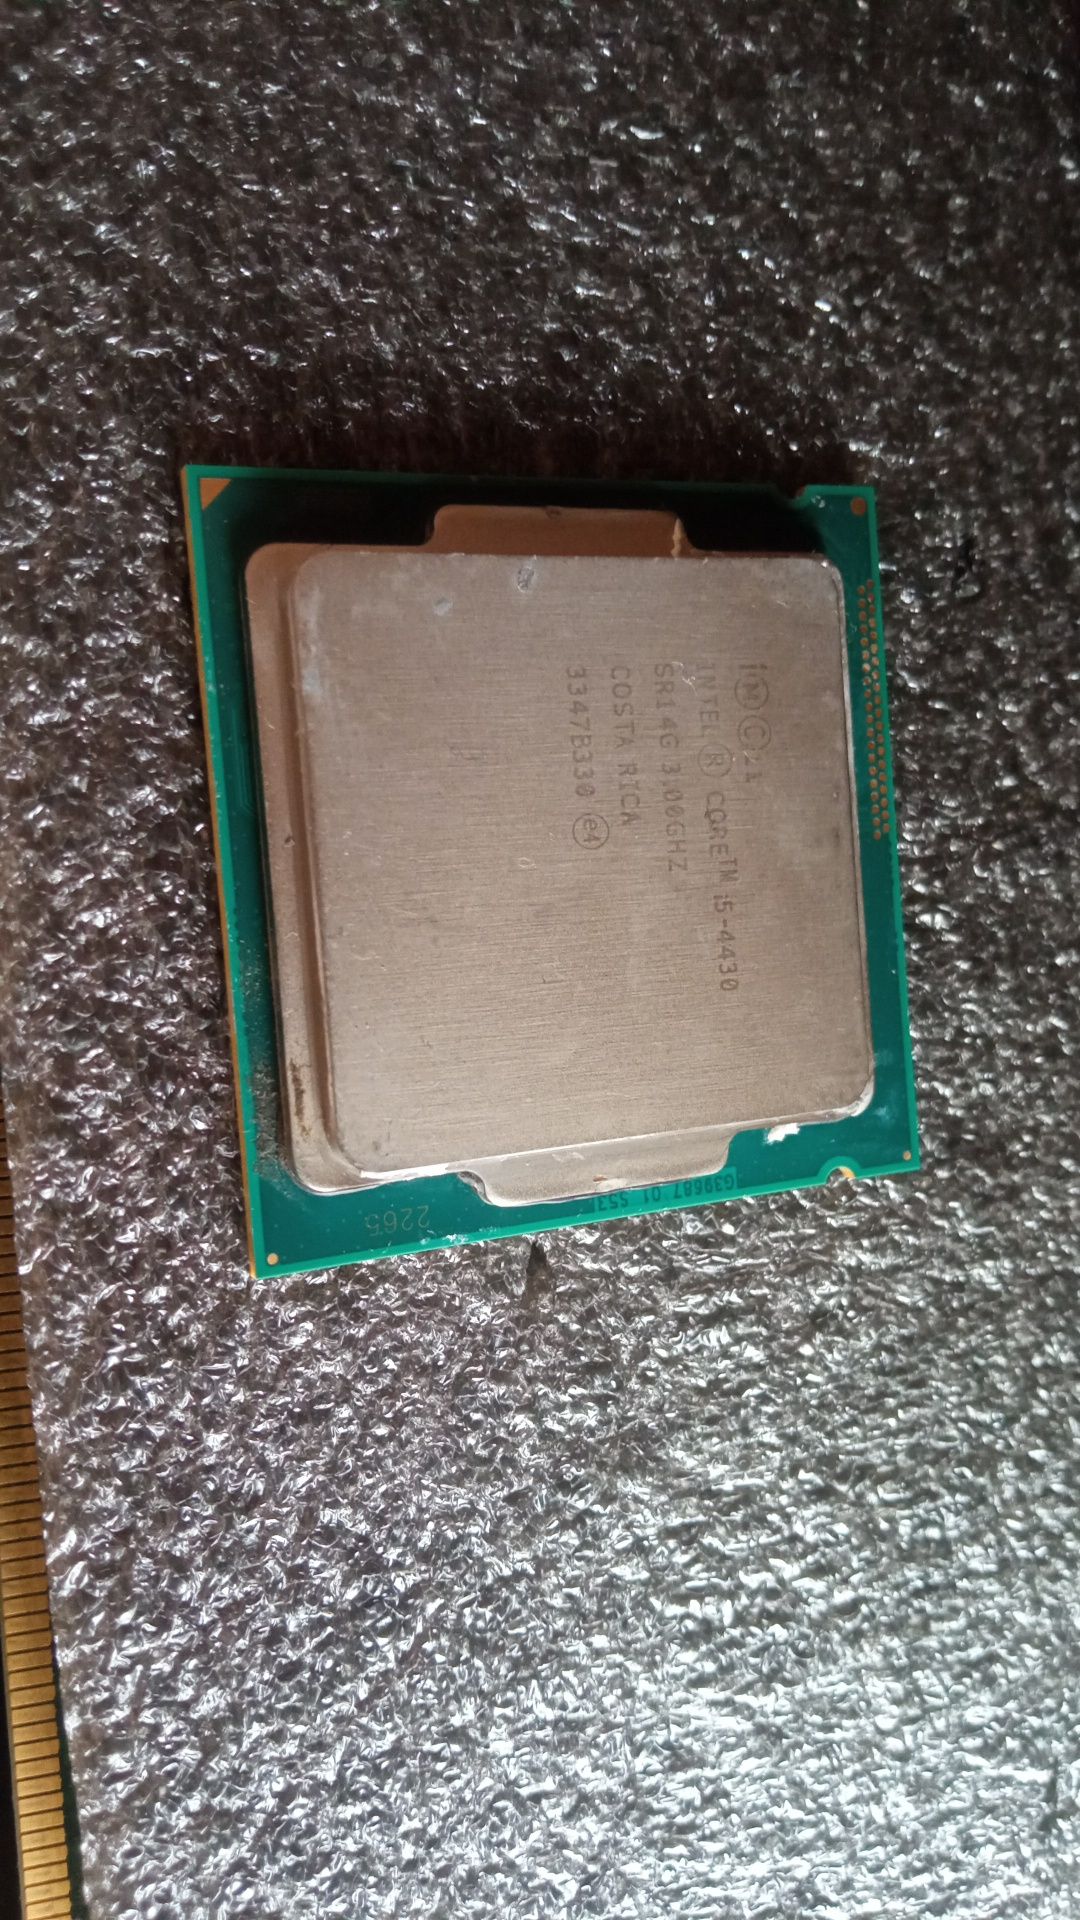 Процессор i5 4430